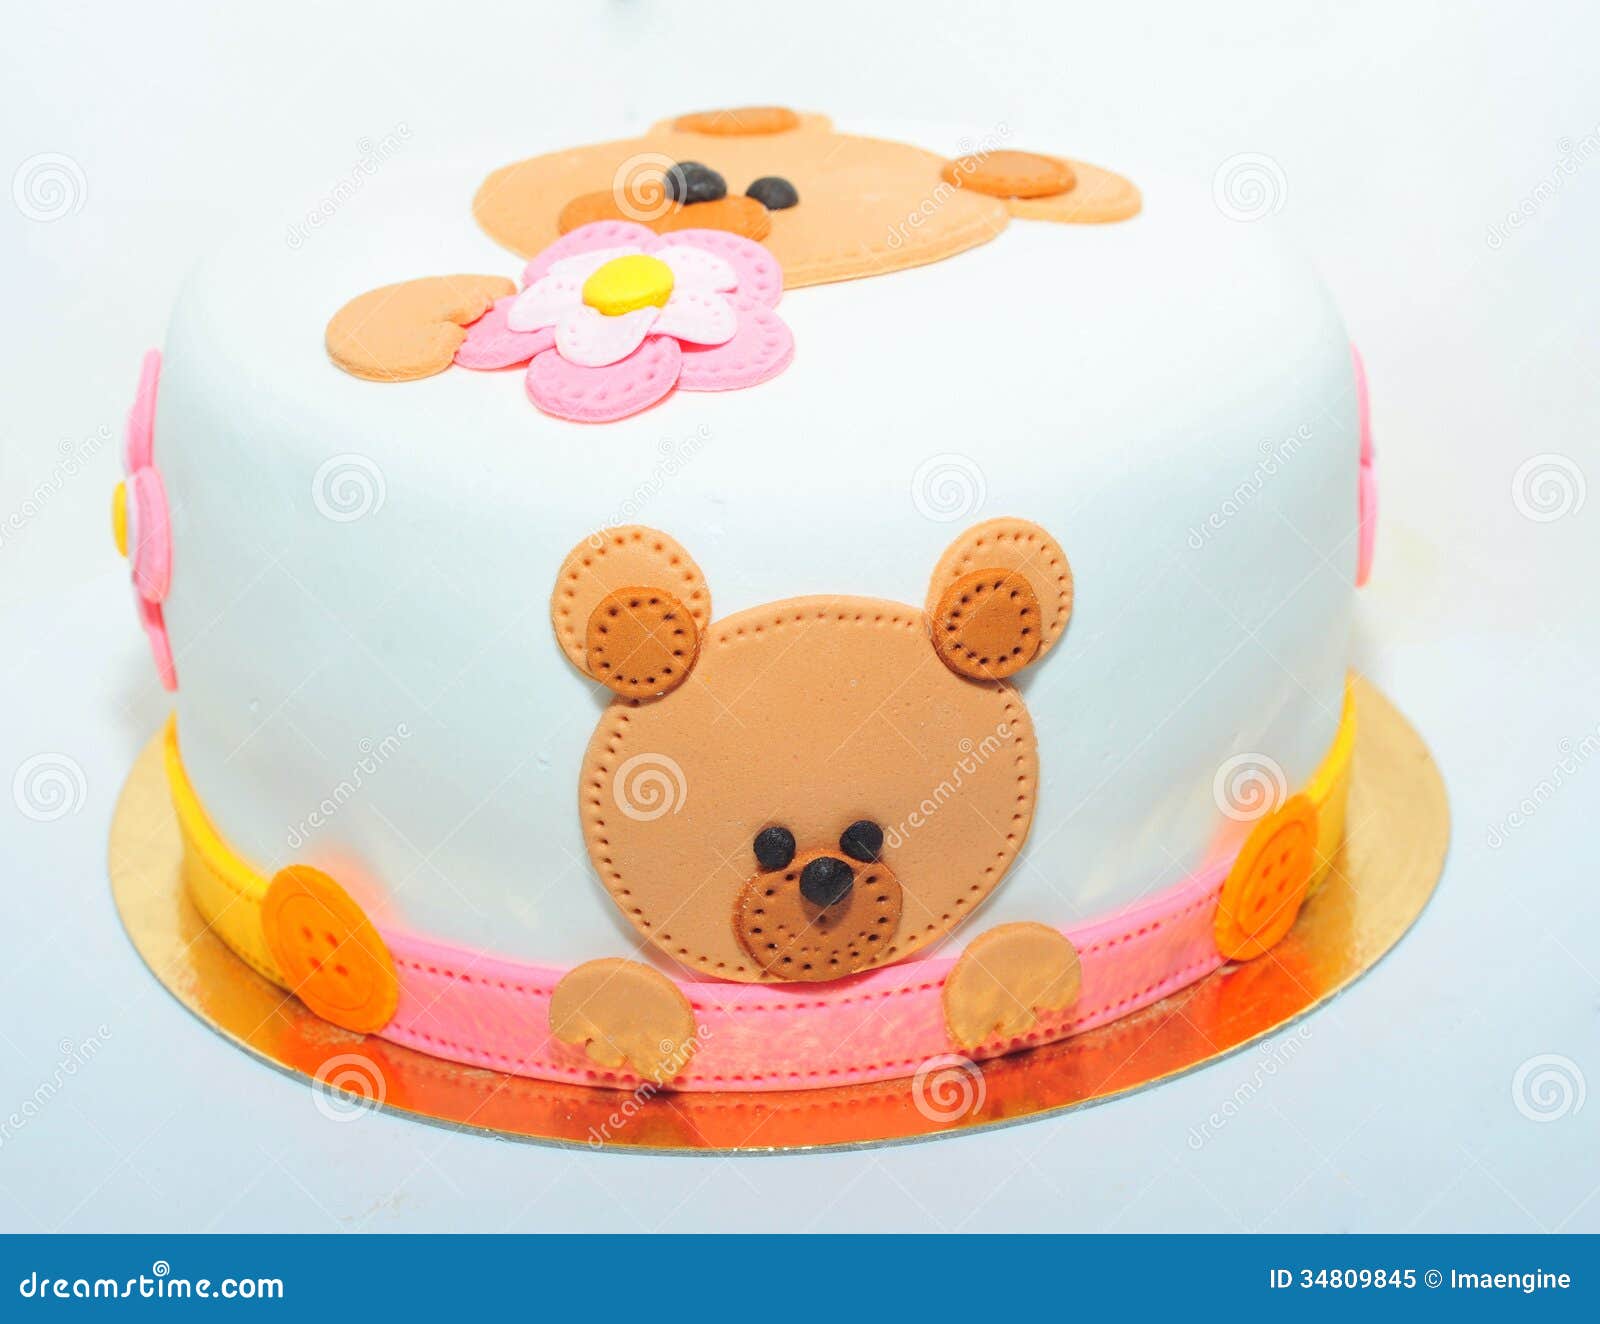 Teddy Bear Birthday Cake for Kids Stock Image - Image of delight ...